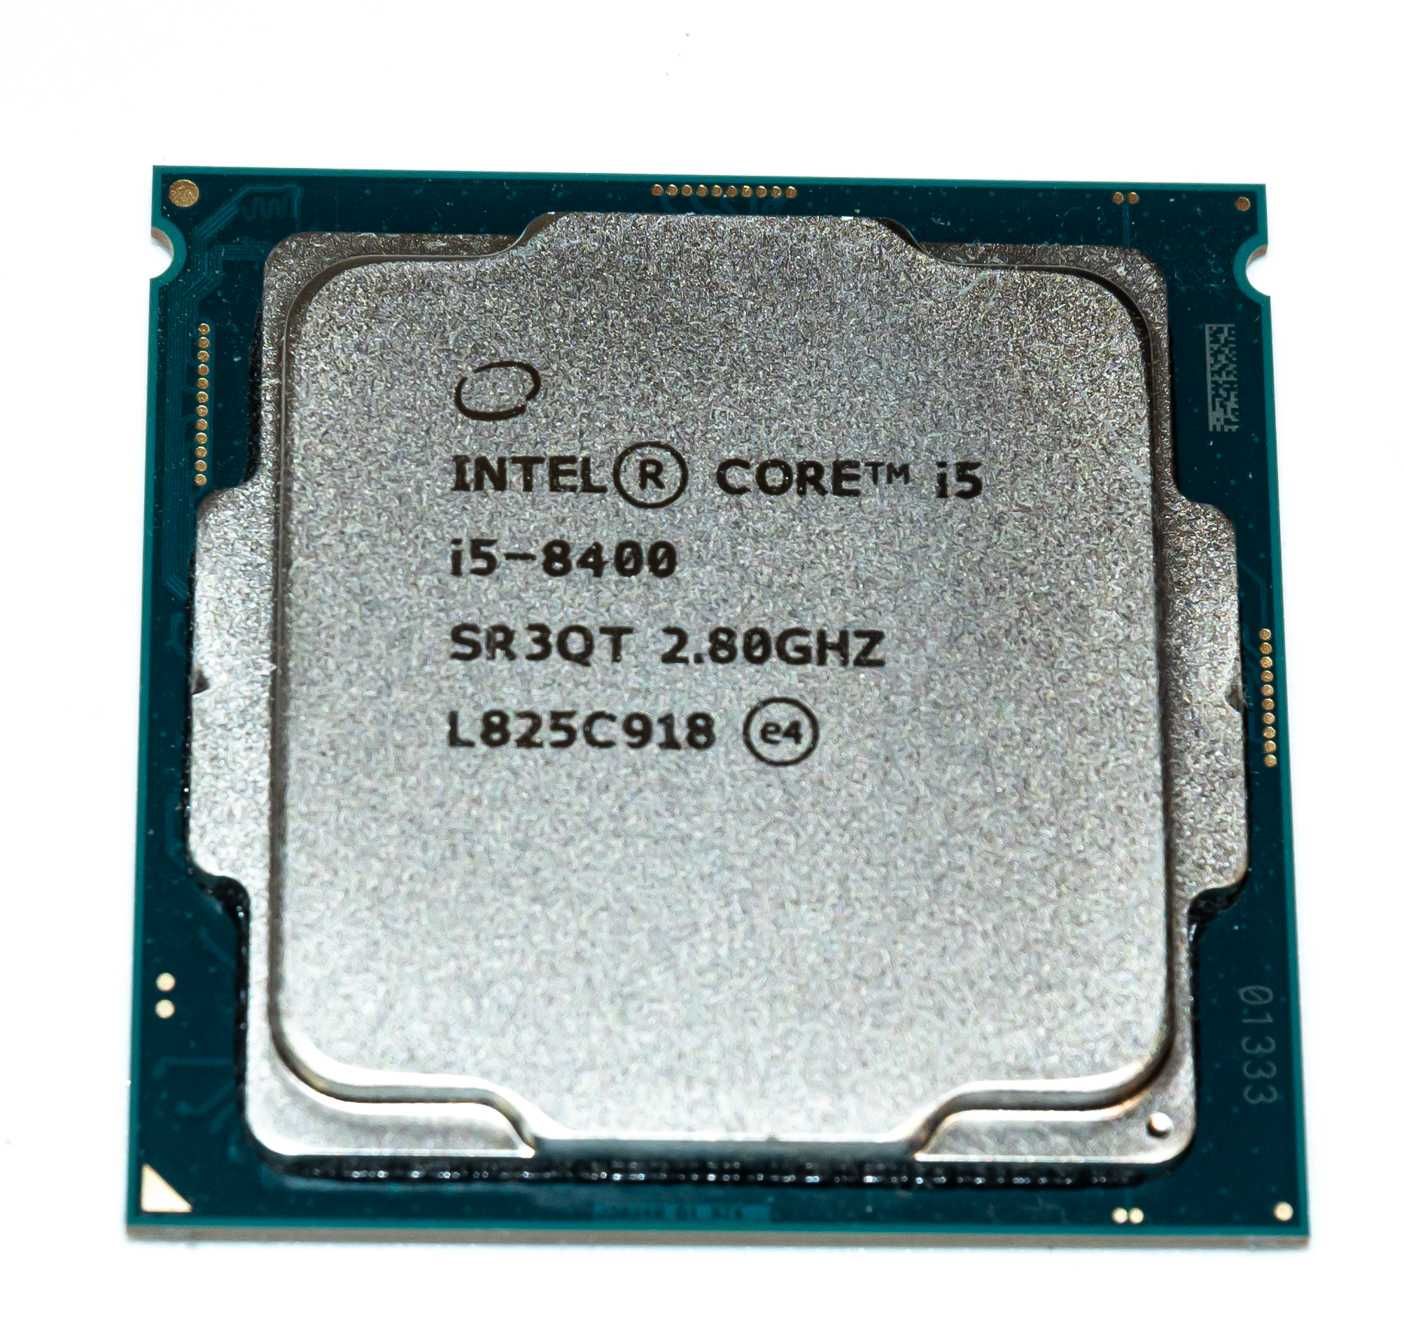 Intel Core i5-8400 6x2.8GHz 9MB LGA1151